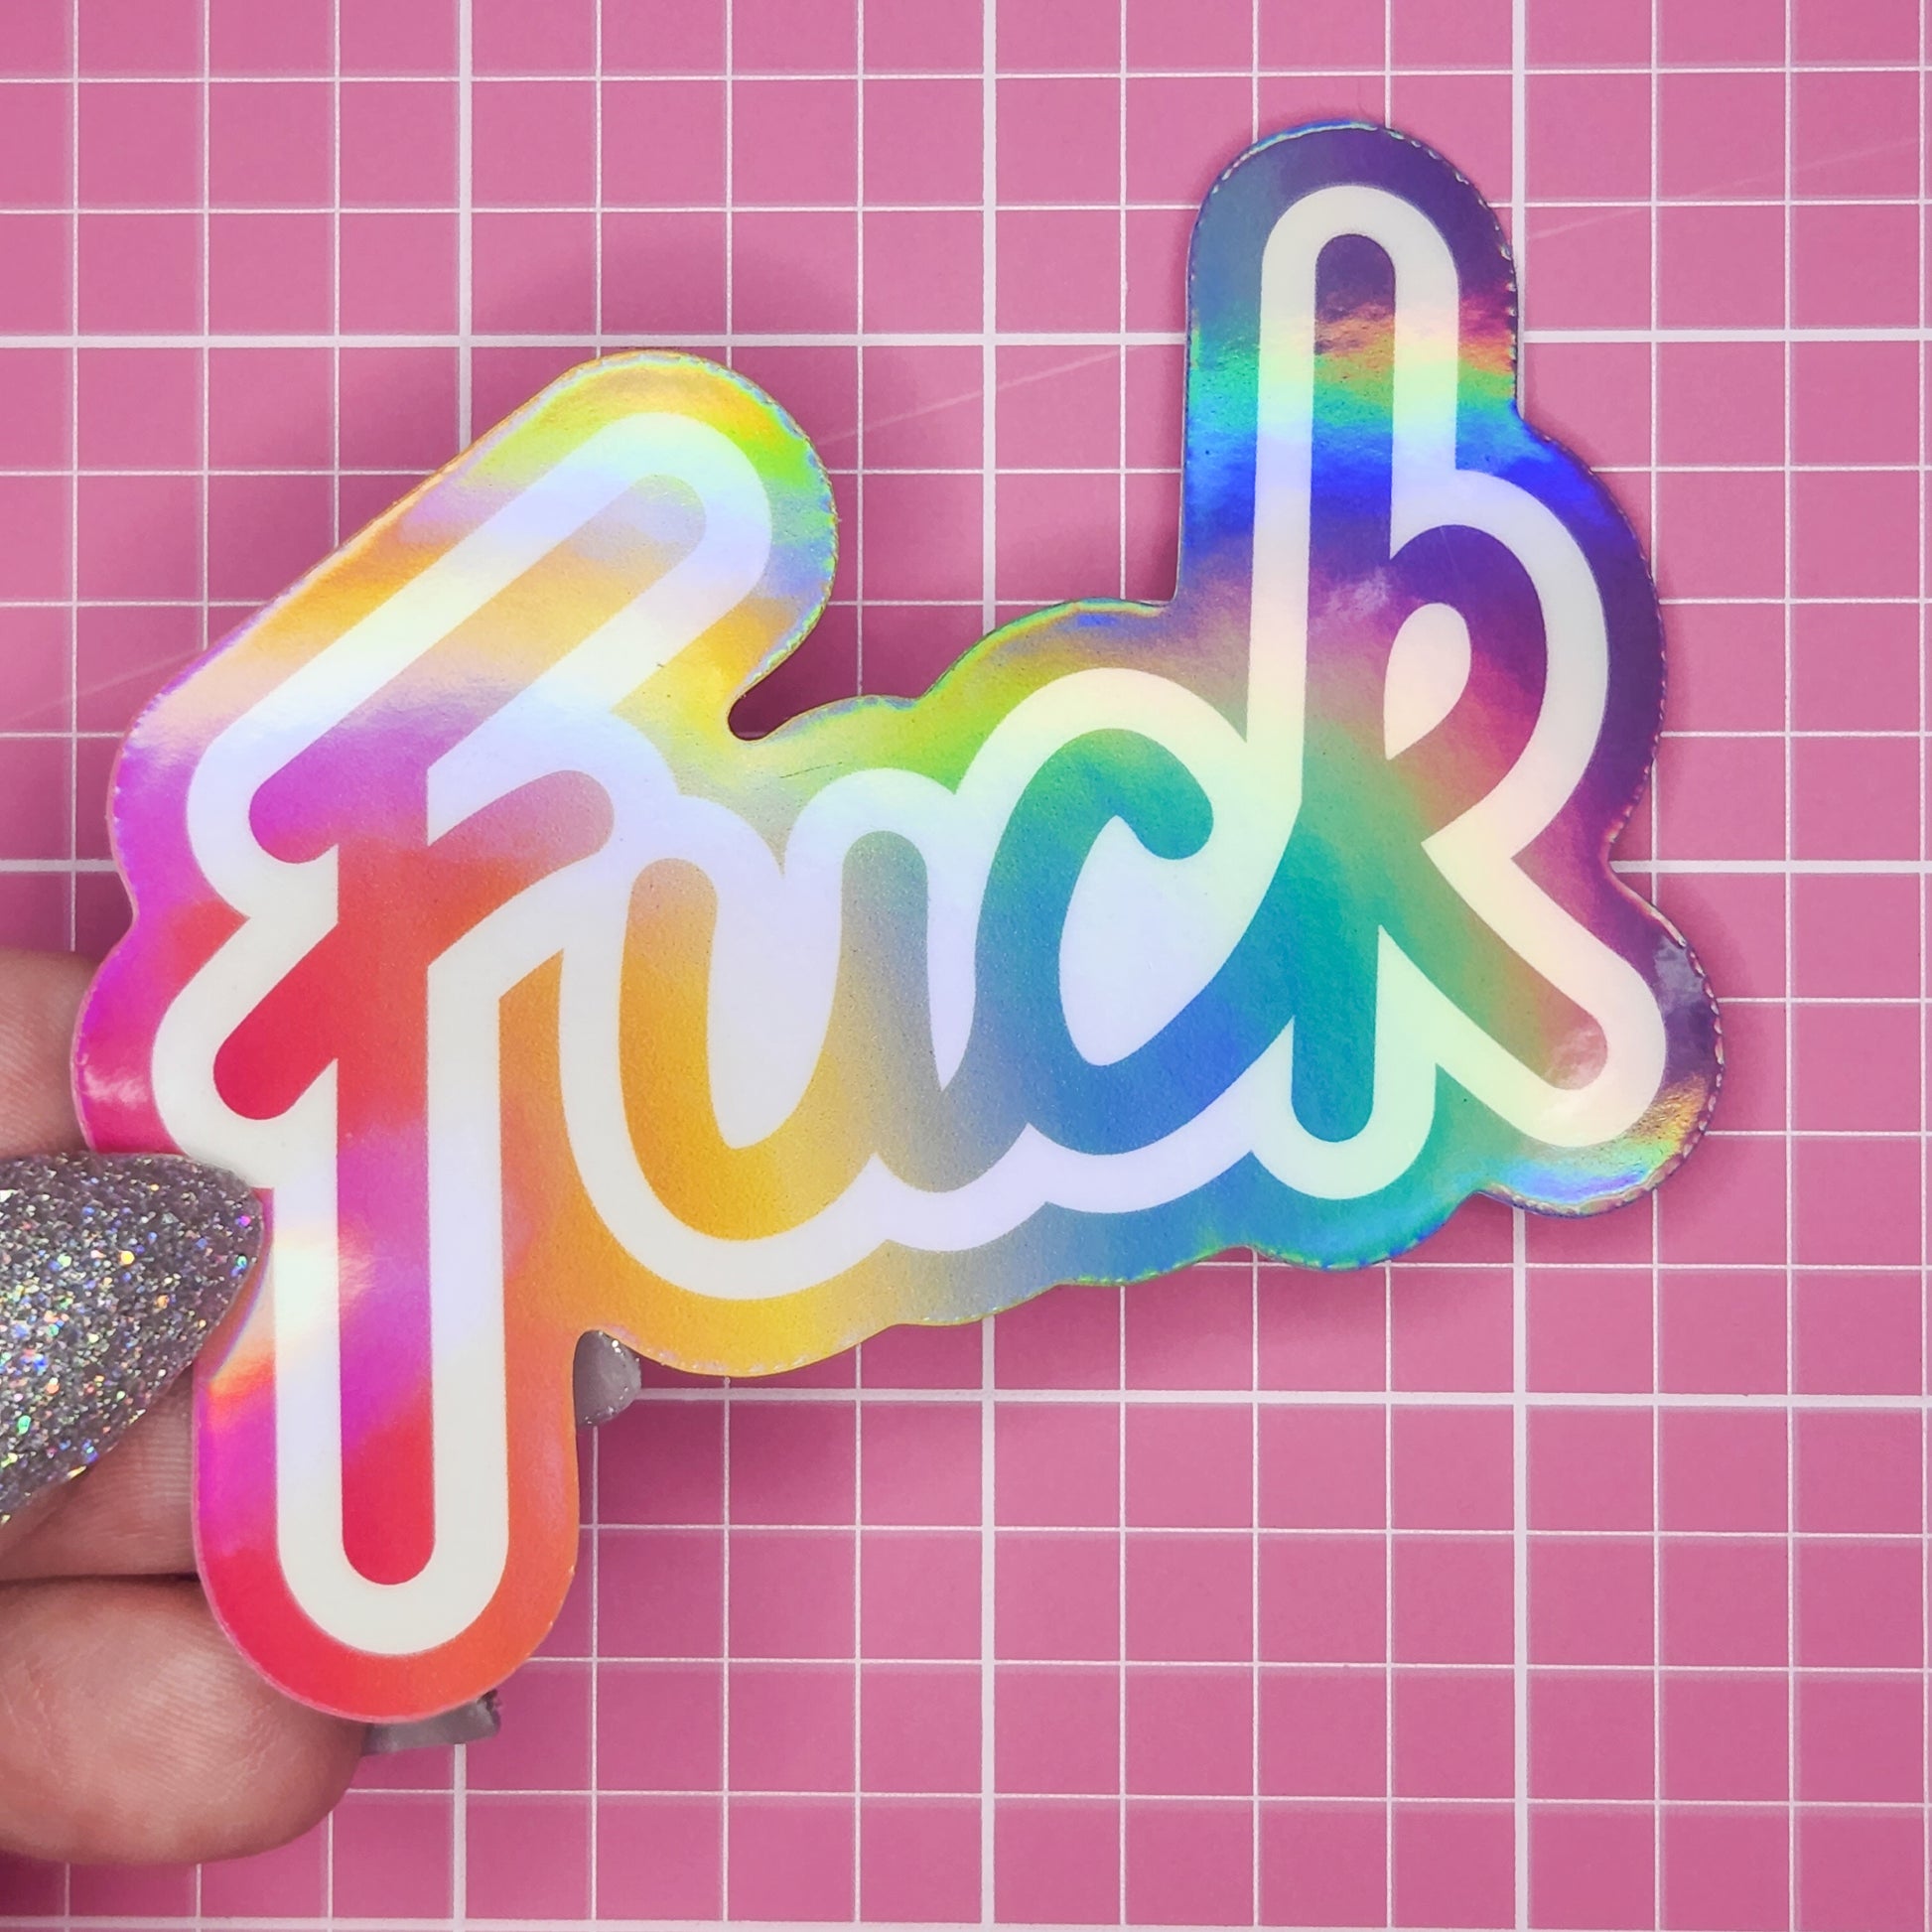 Lisa Frank Inspired Holographic Starbucks Sticker, 3in. – Pretty